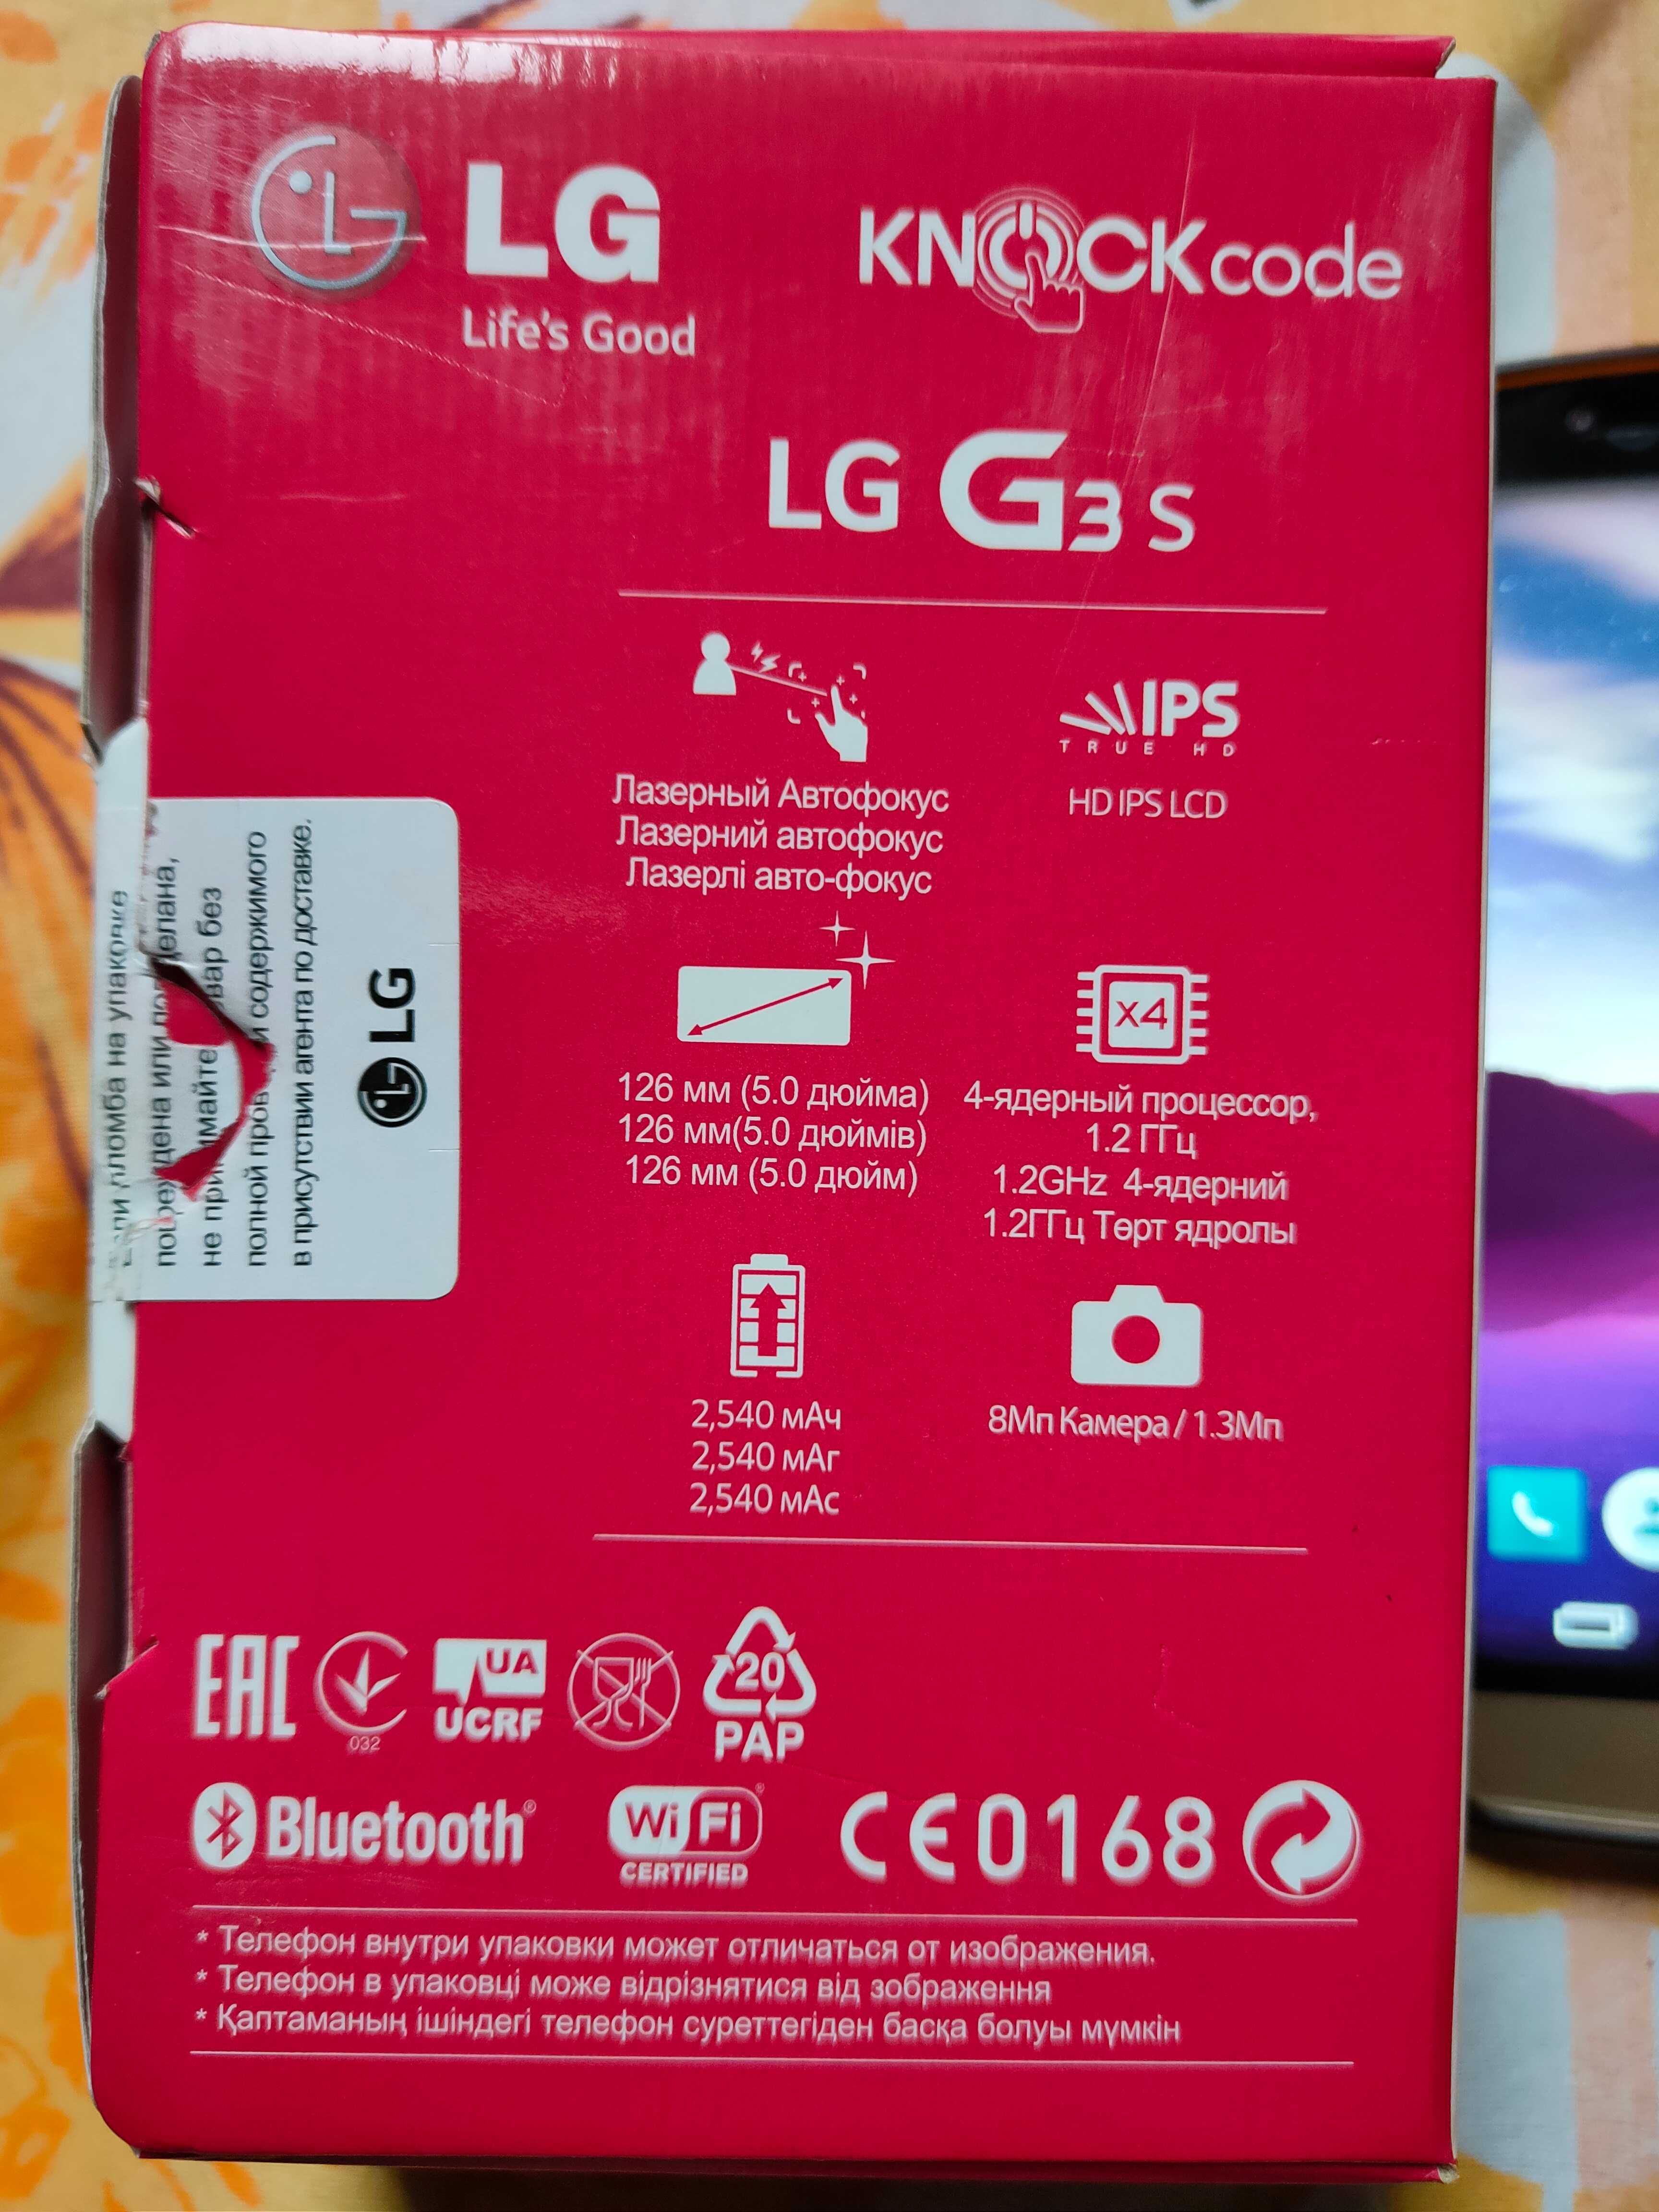 LG G3s Юж-Корея.